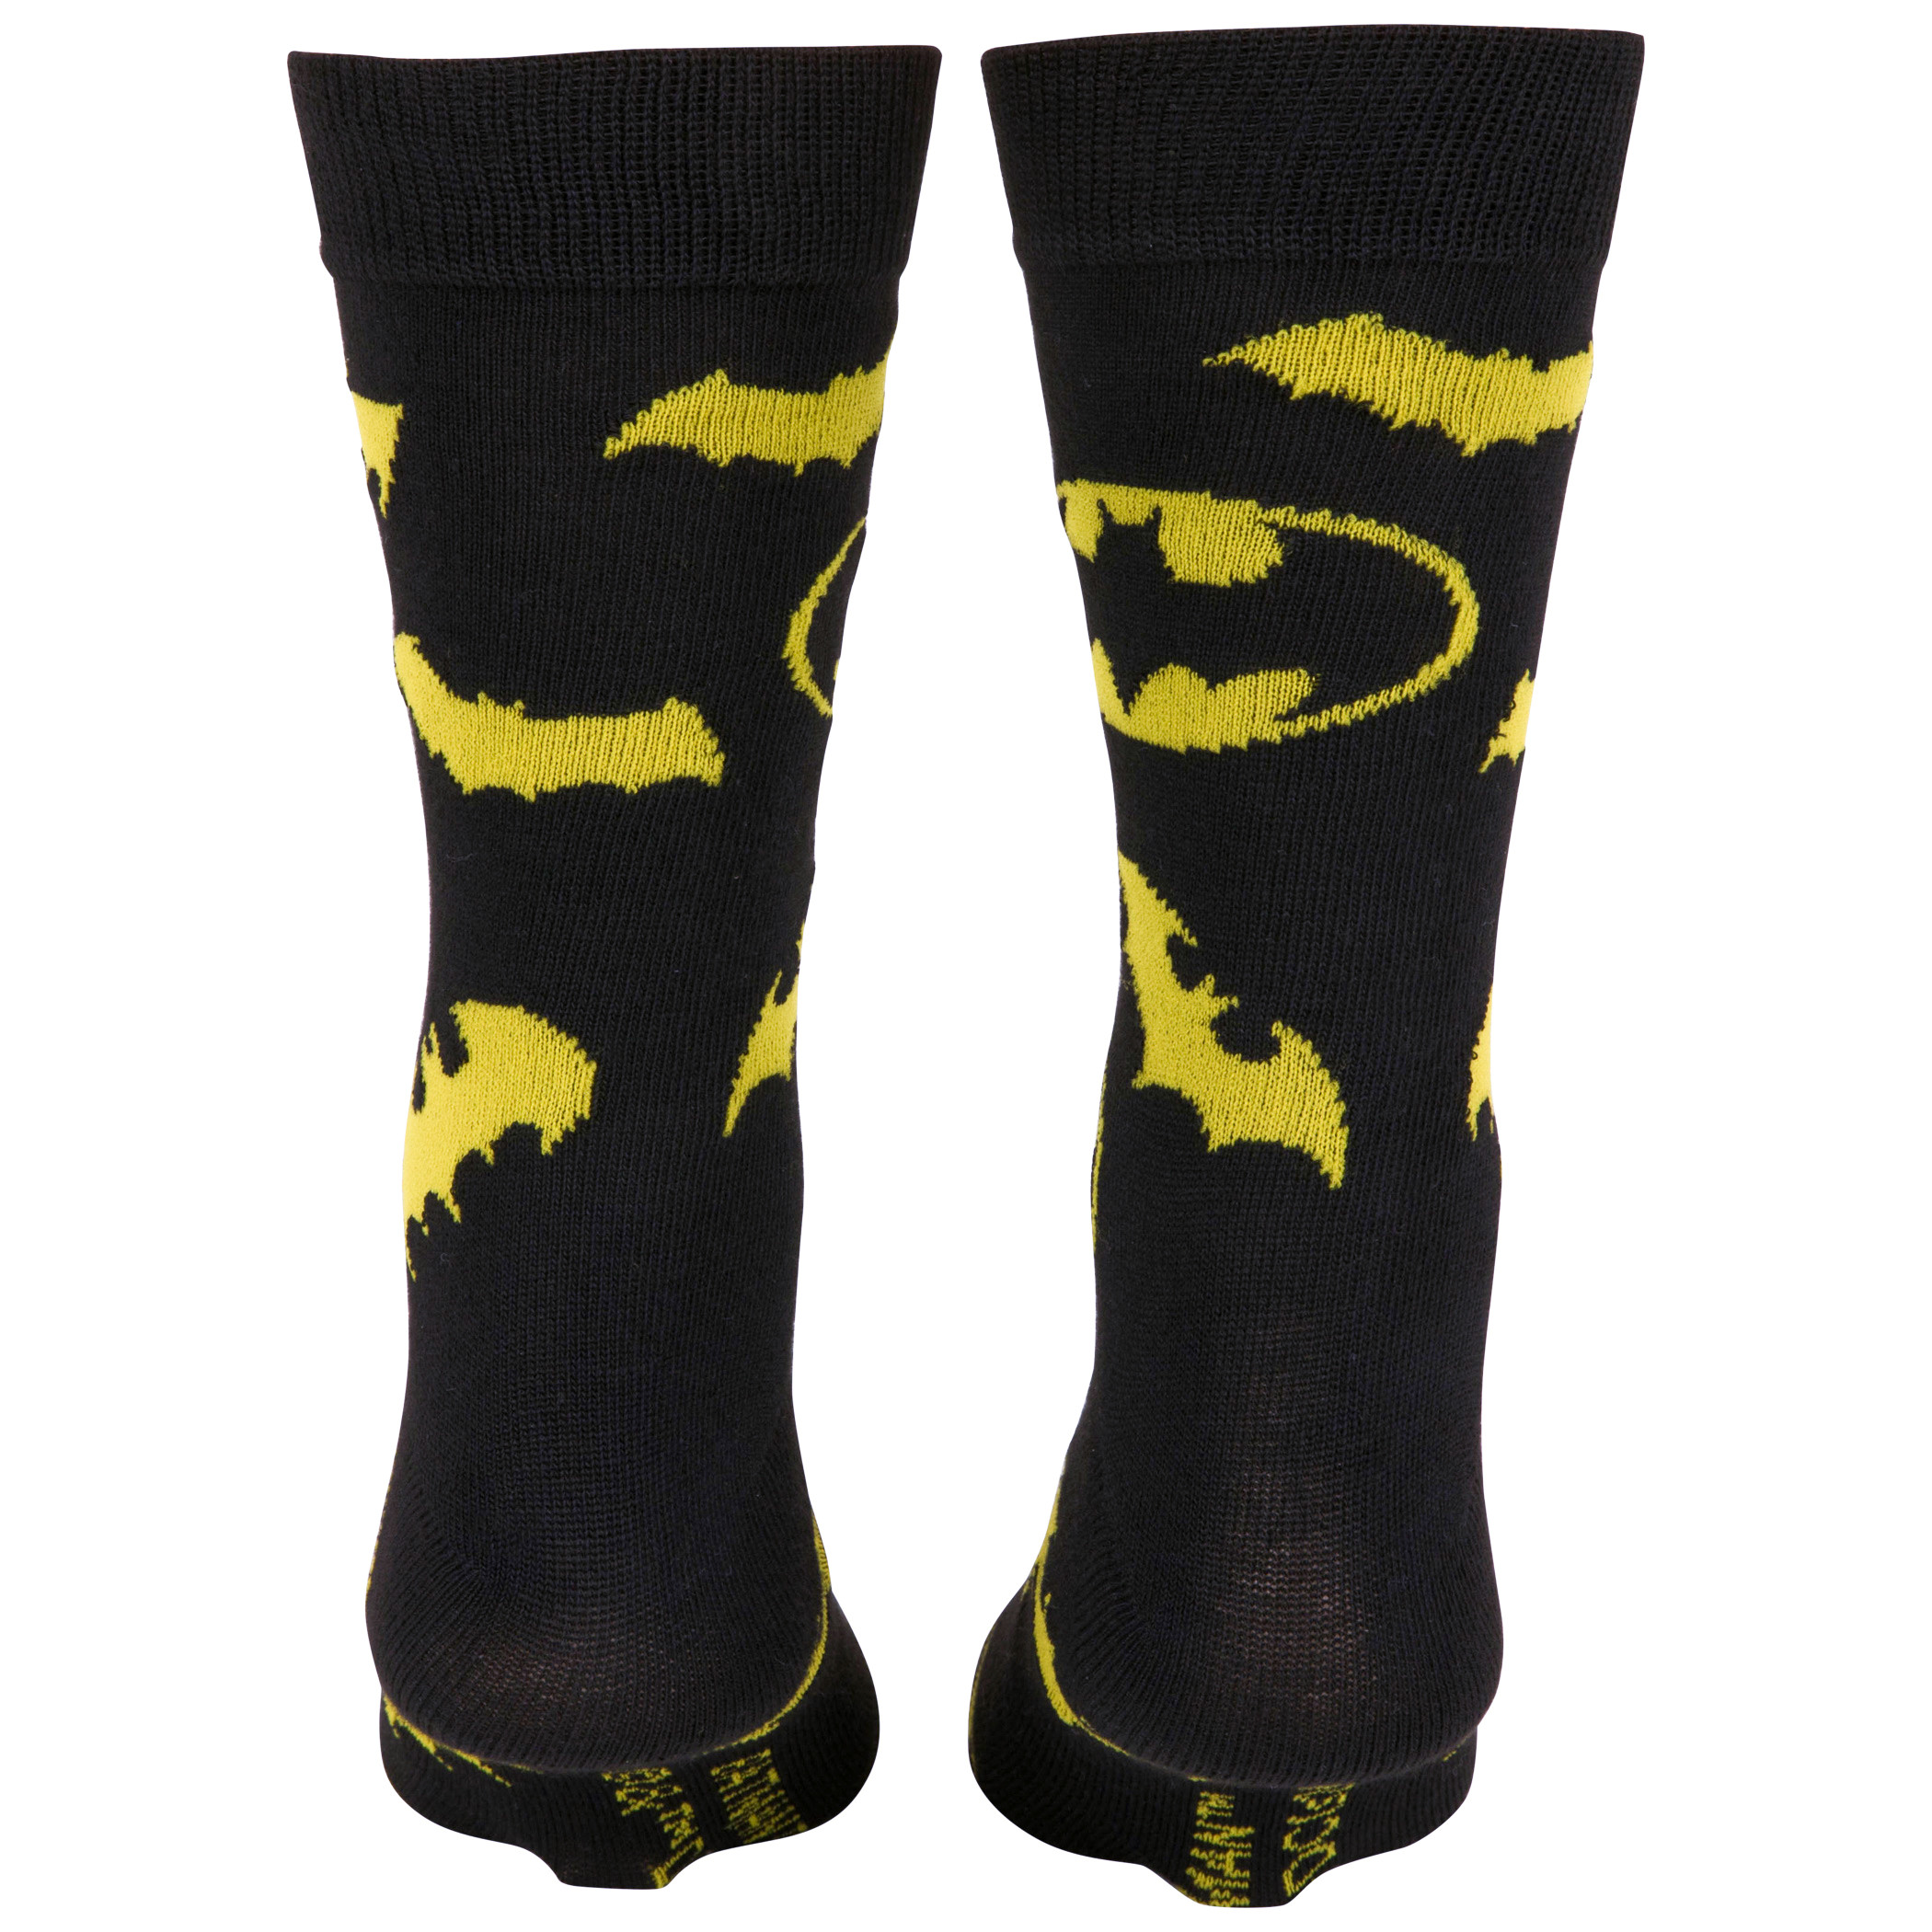 Batman History of Logos Crew Socks